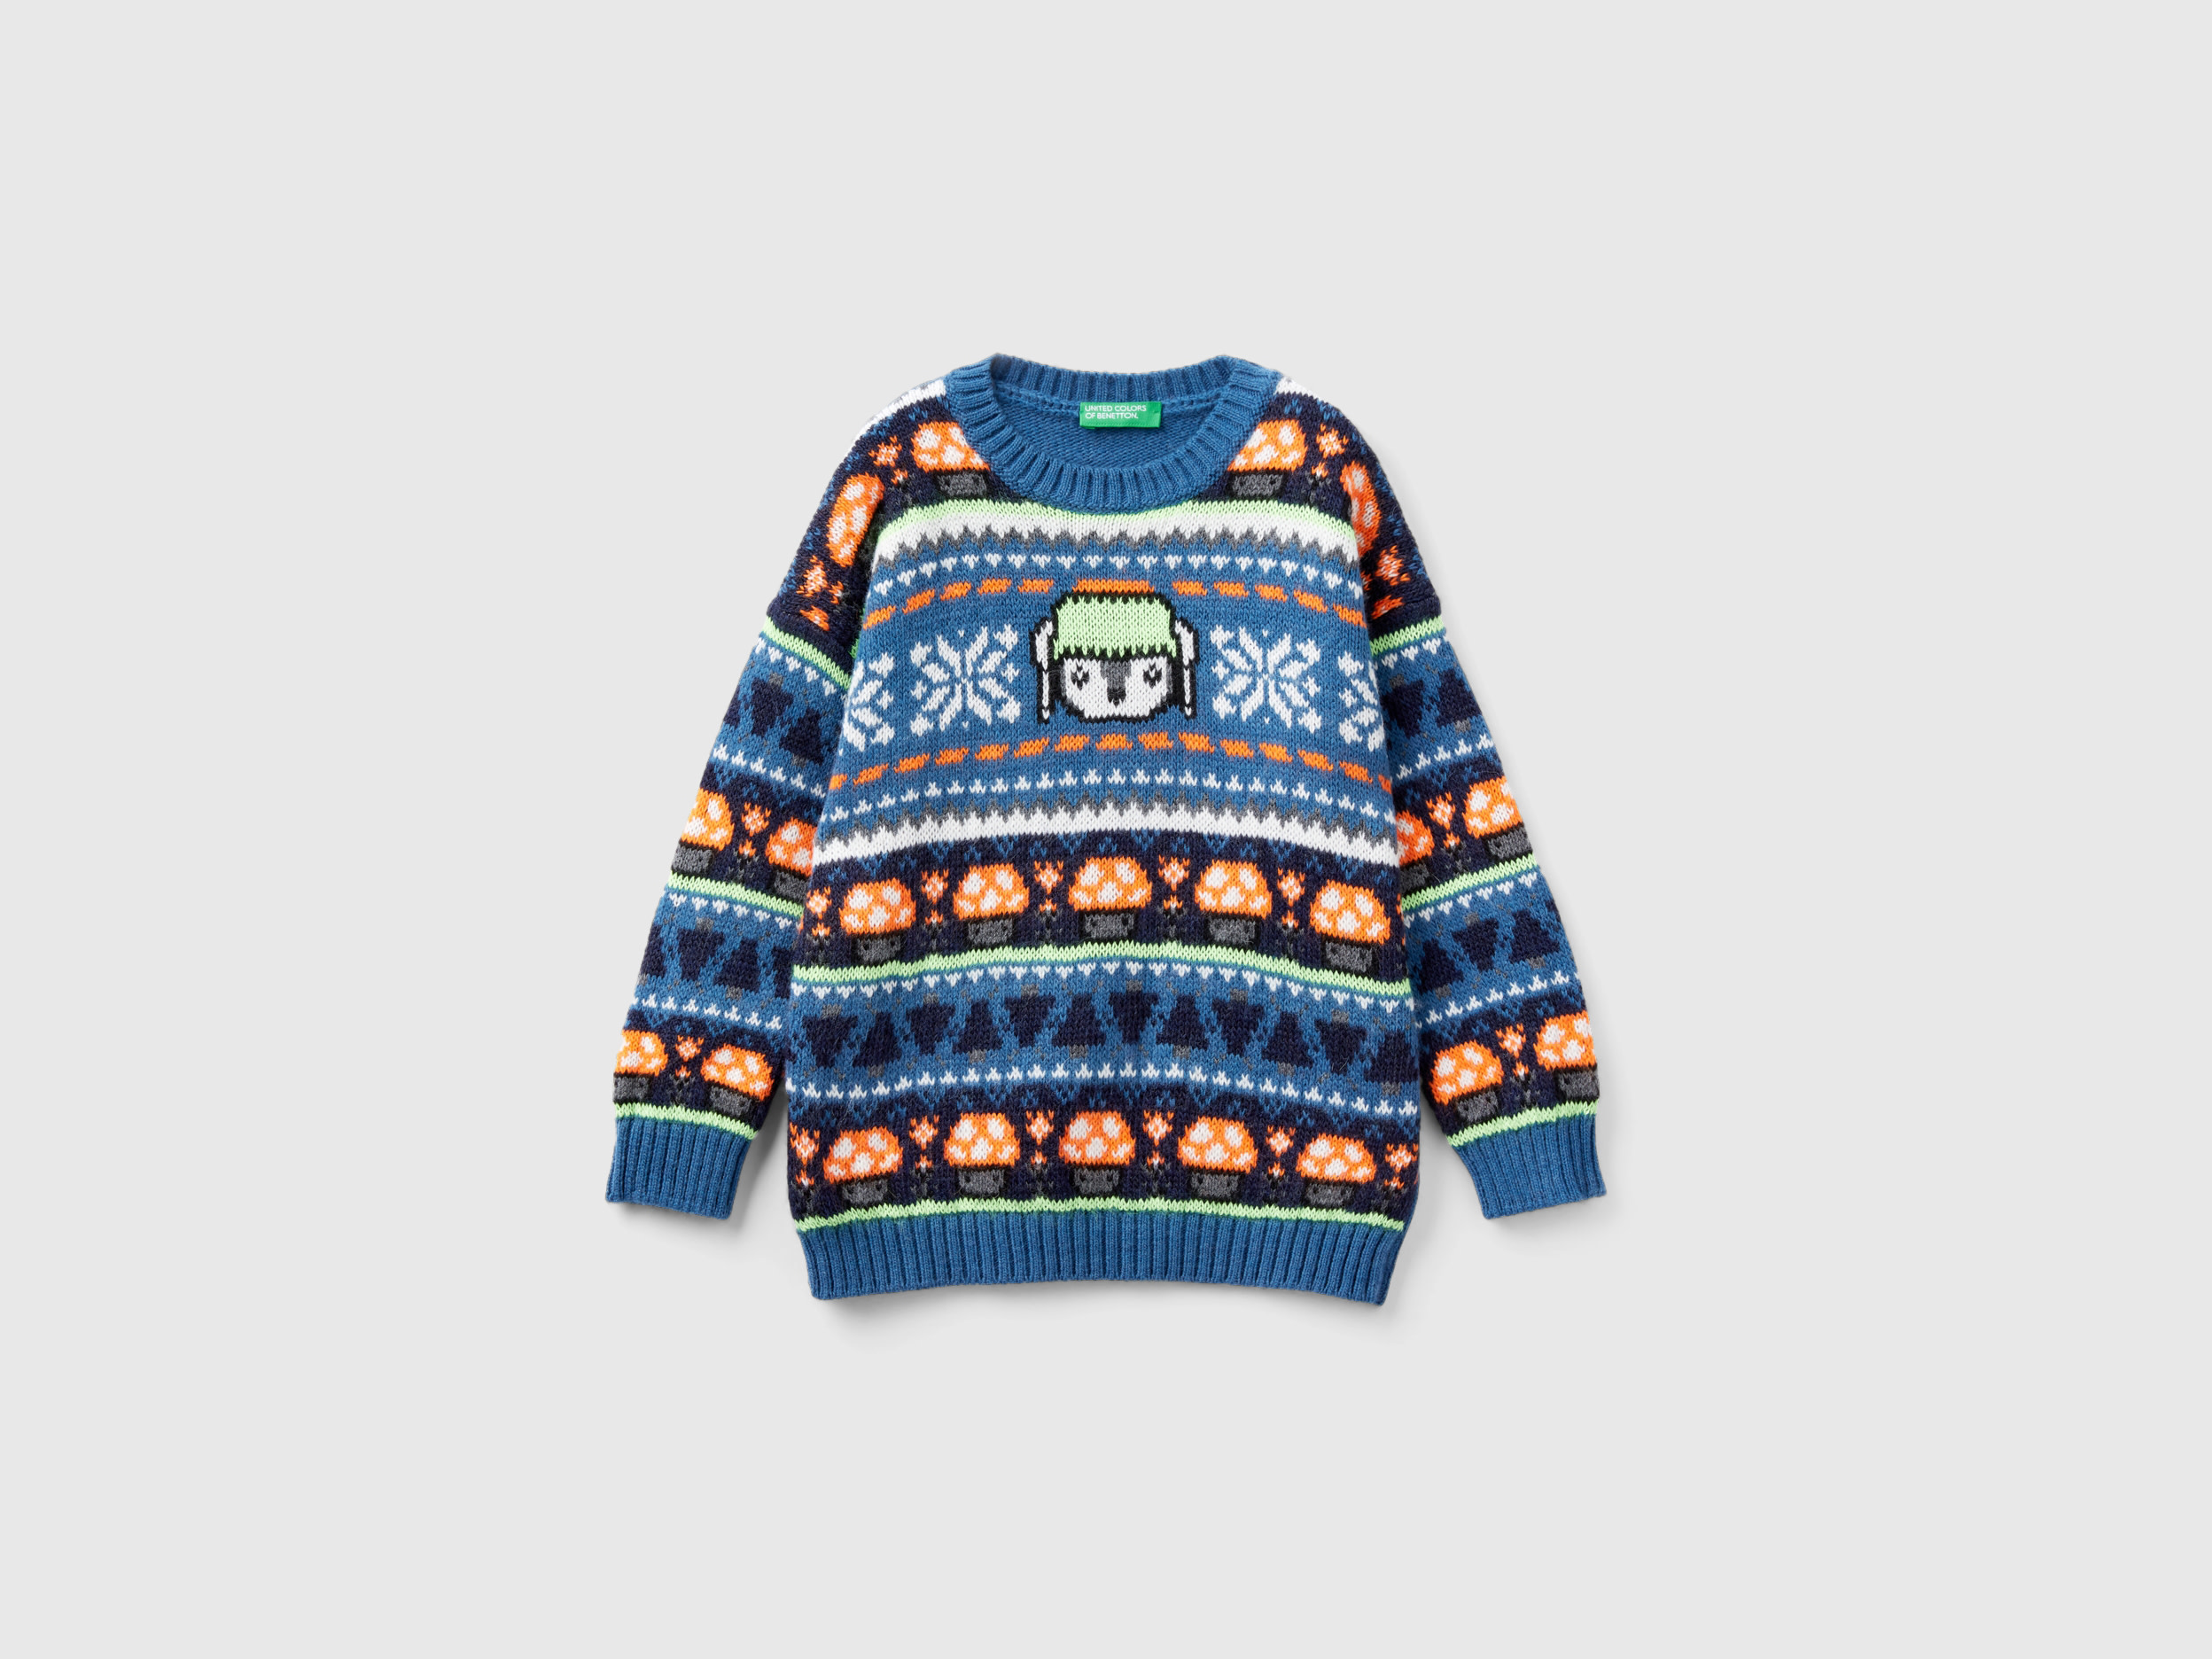 Benetton, Jacquard Sweater In Wool Blend, size 3-4, Multi-color, Kids